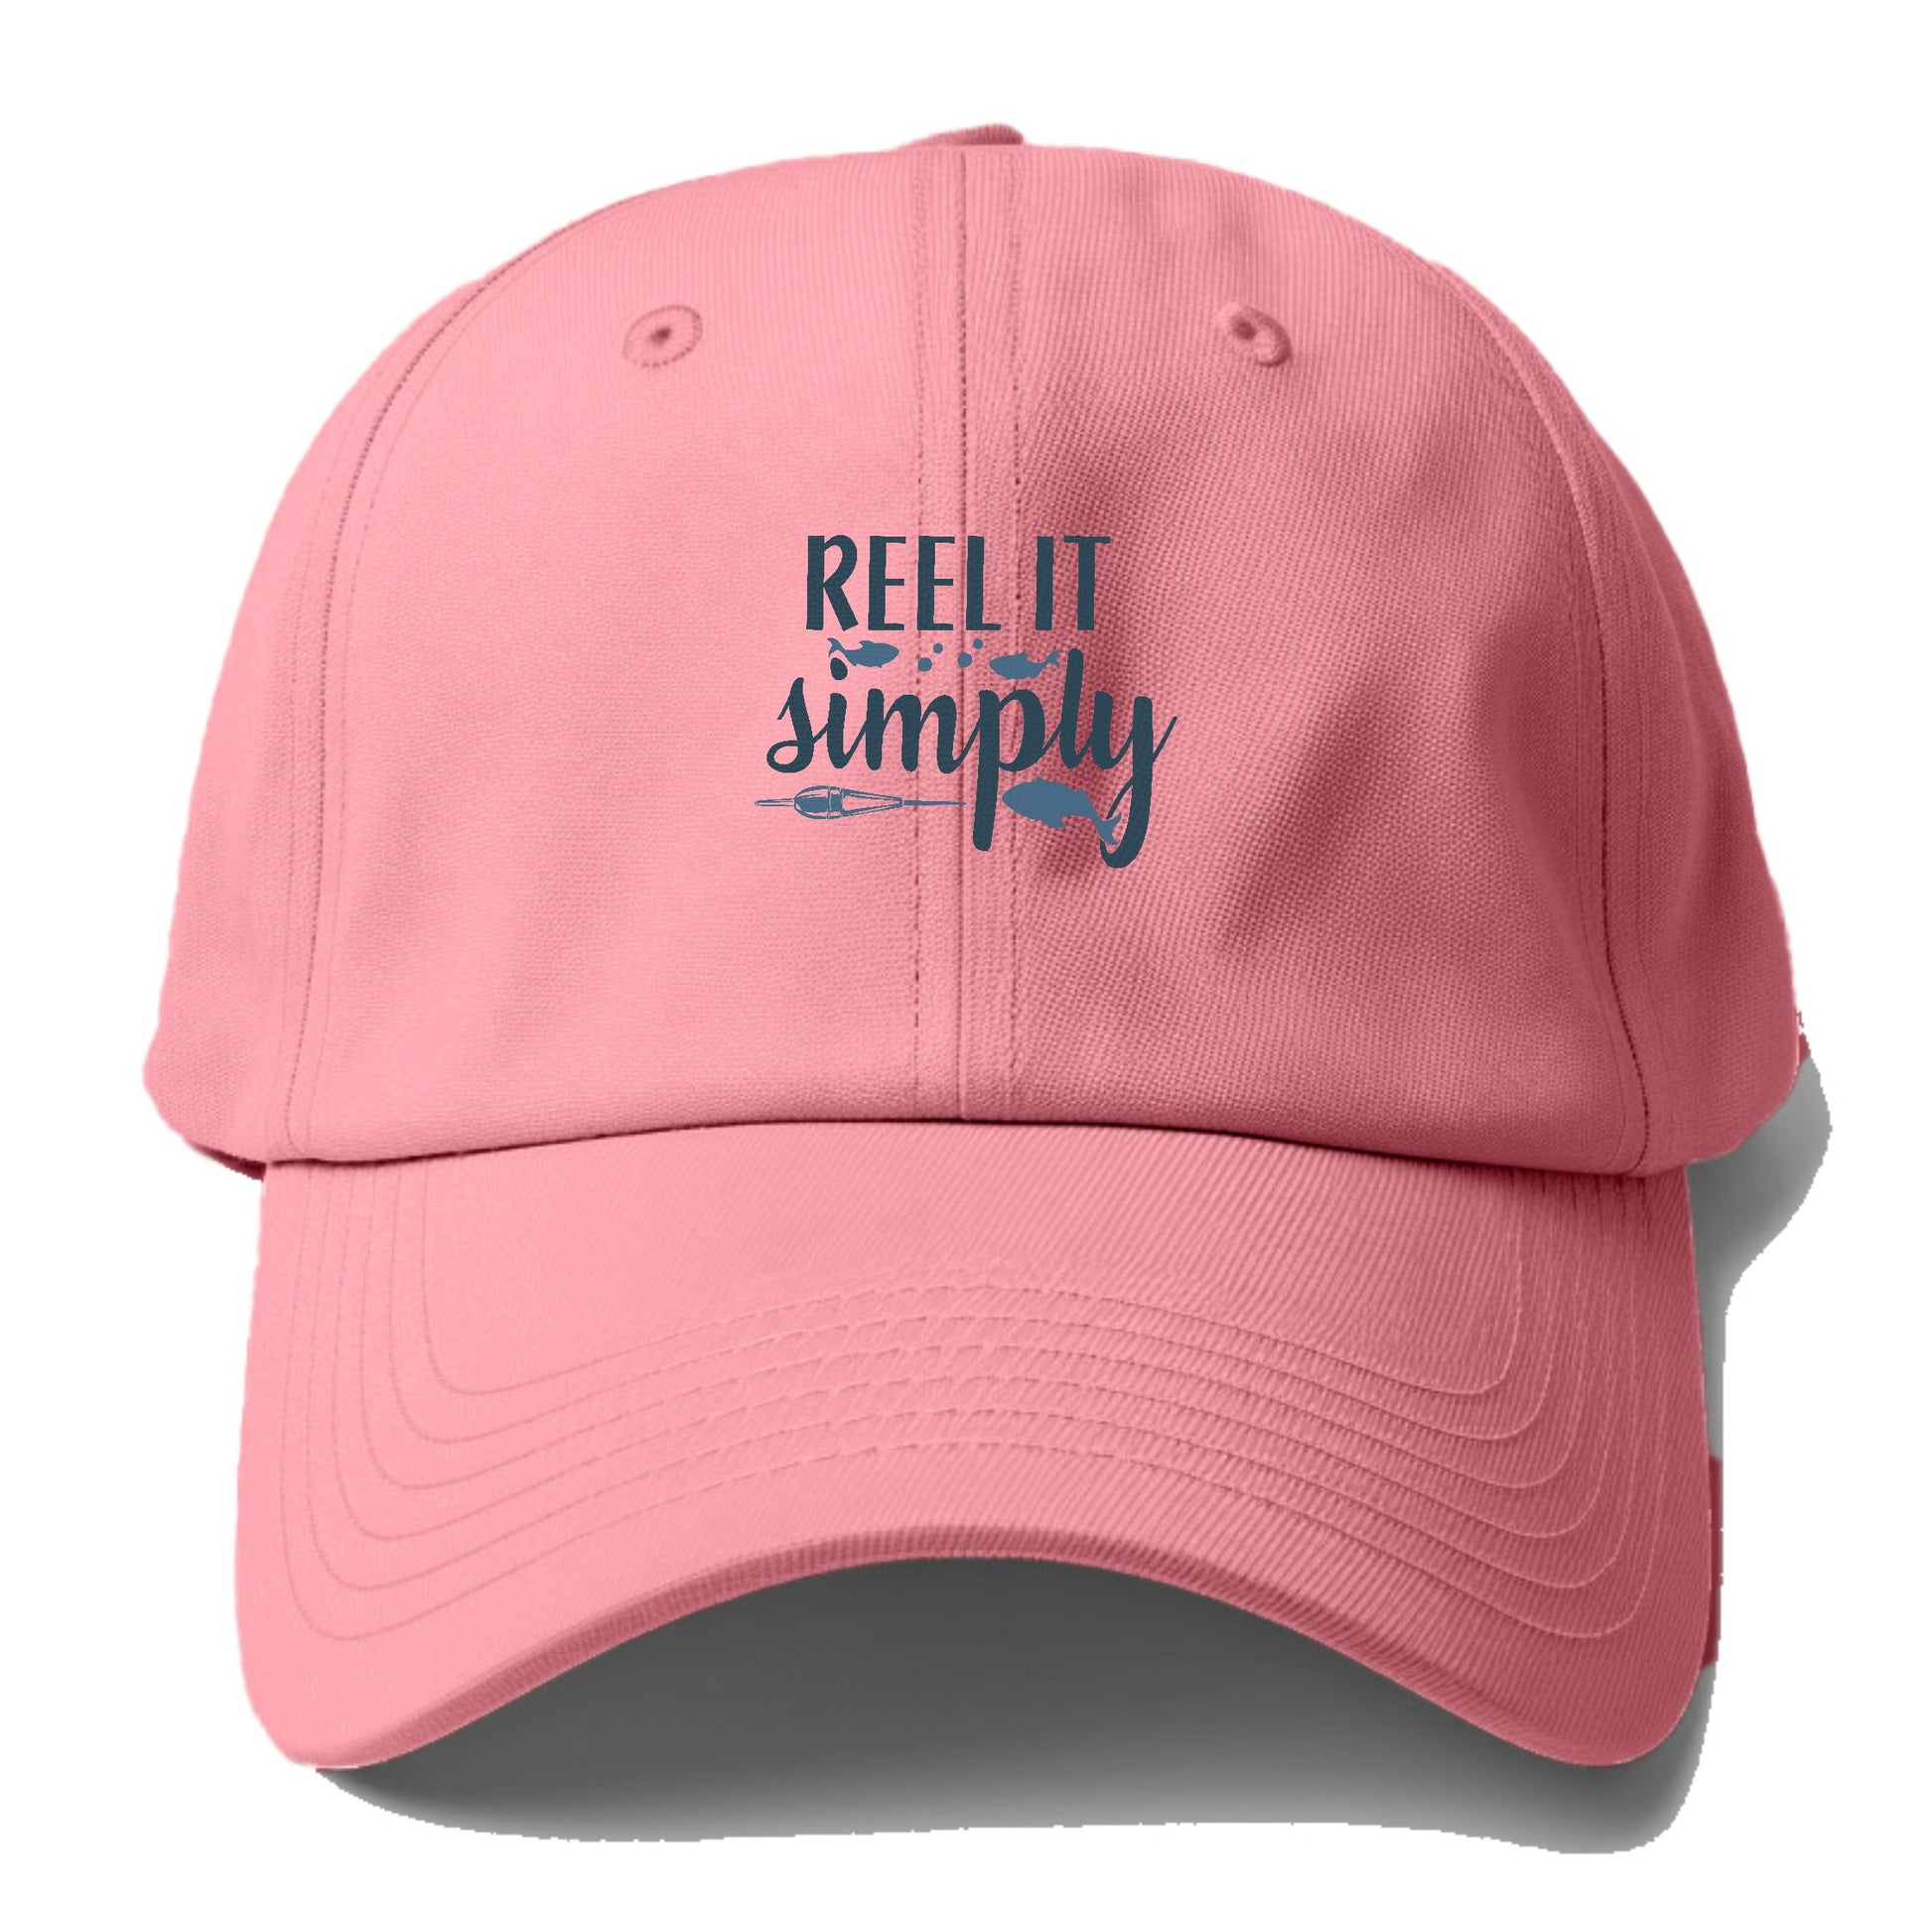 Reel it simply Hat